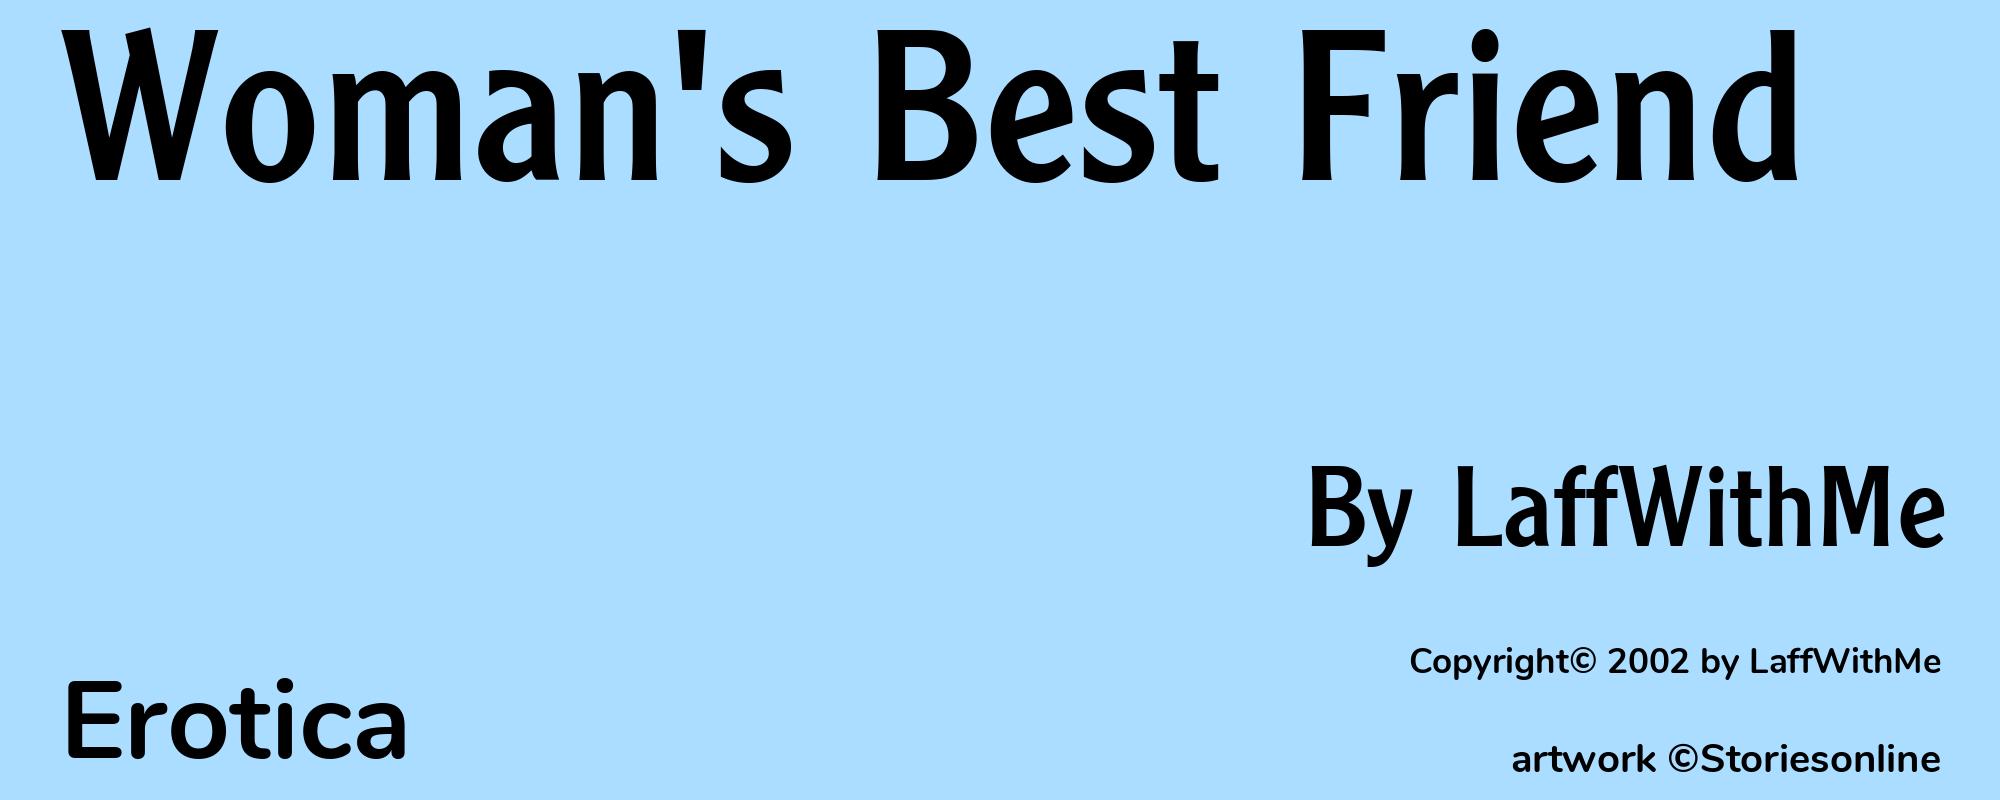 Woman's Best Friend - Cover